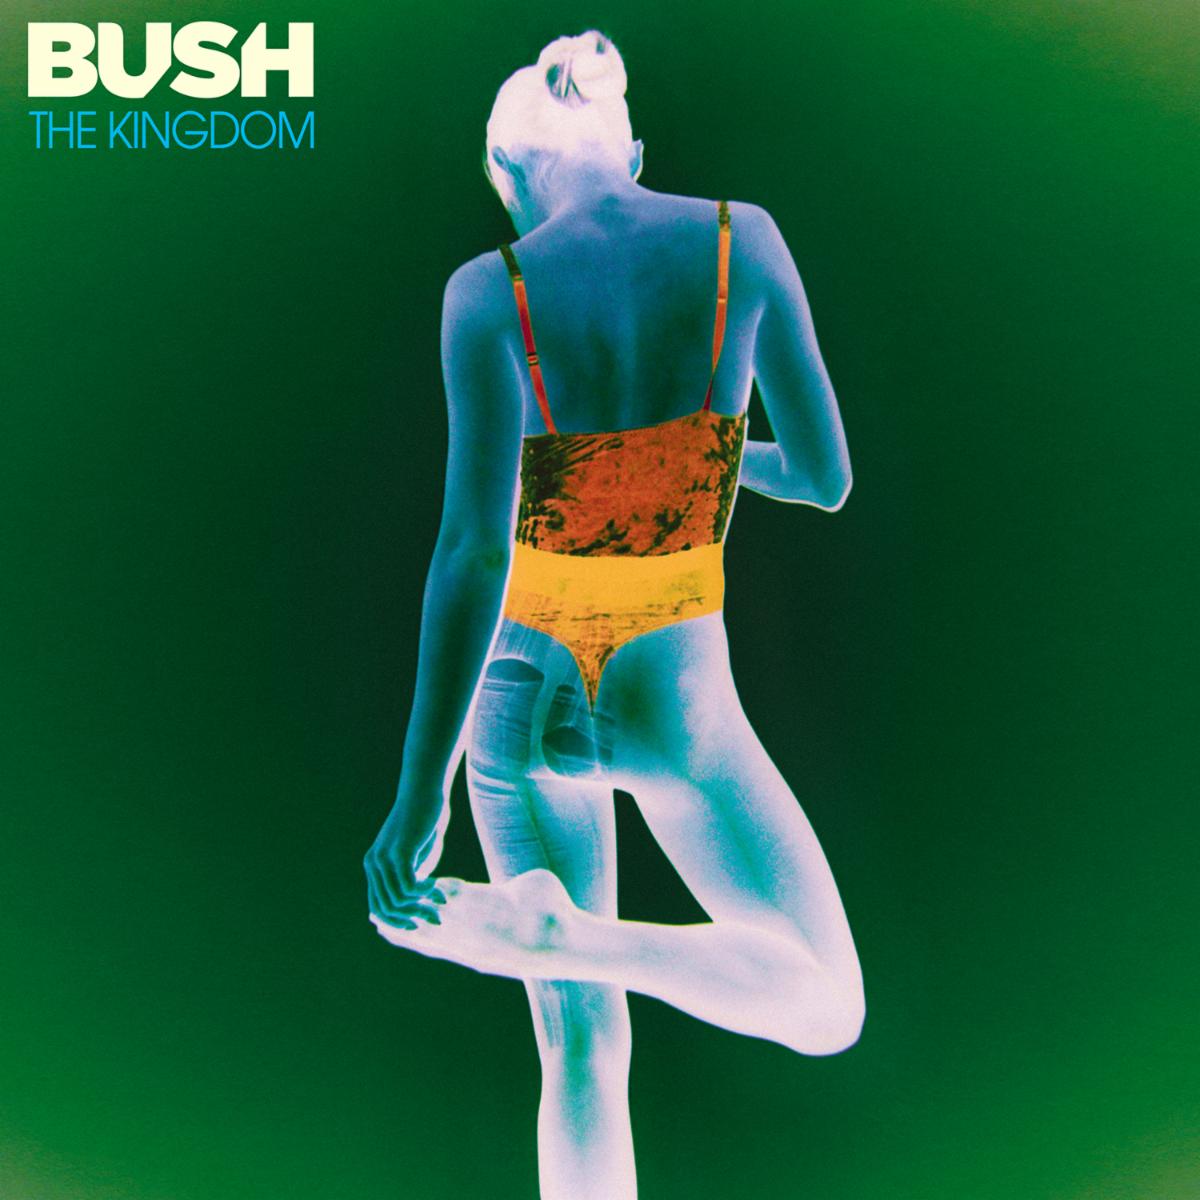 BUSH’S THE KINGDOM DEBUTS AT NO. 1 ON BILLBOARD’S HARD MUSIC ALBUMS CHART